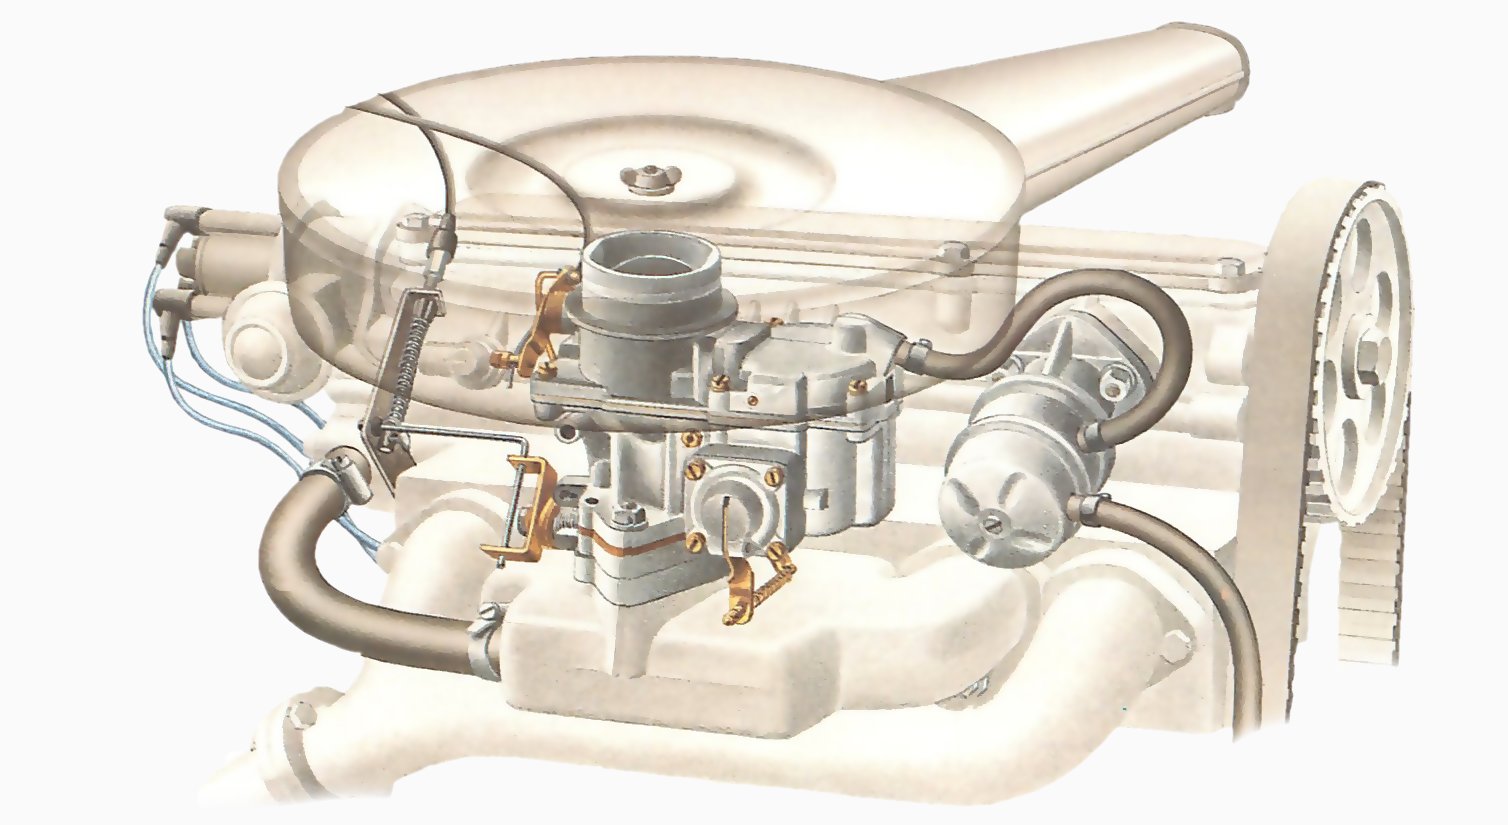 Adjusting a Stromberg carburettor | How a Car Works